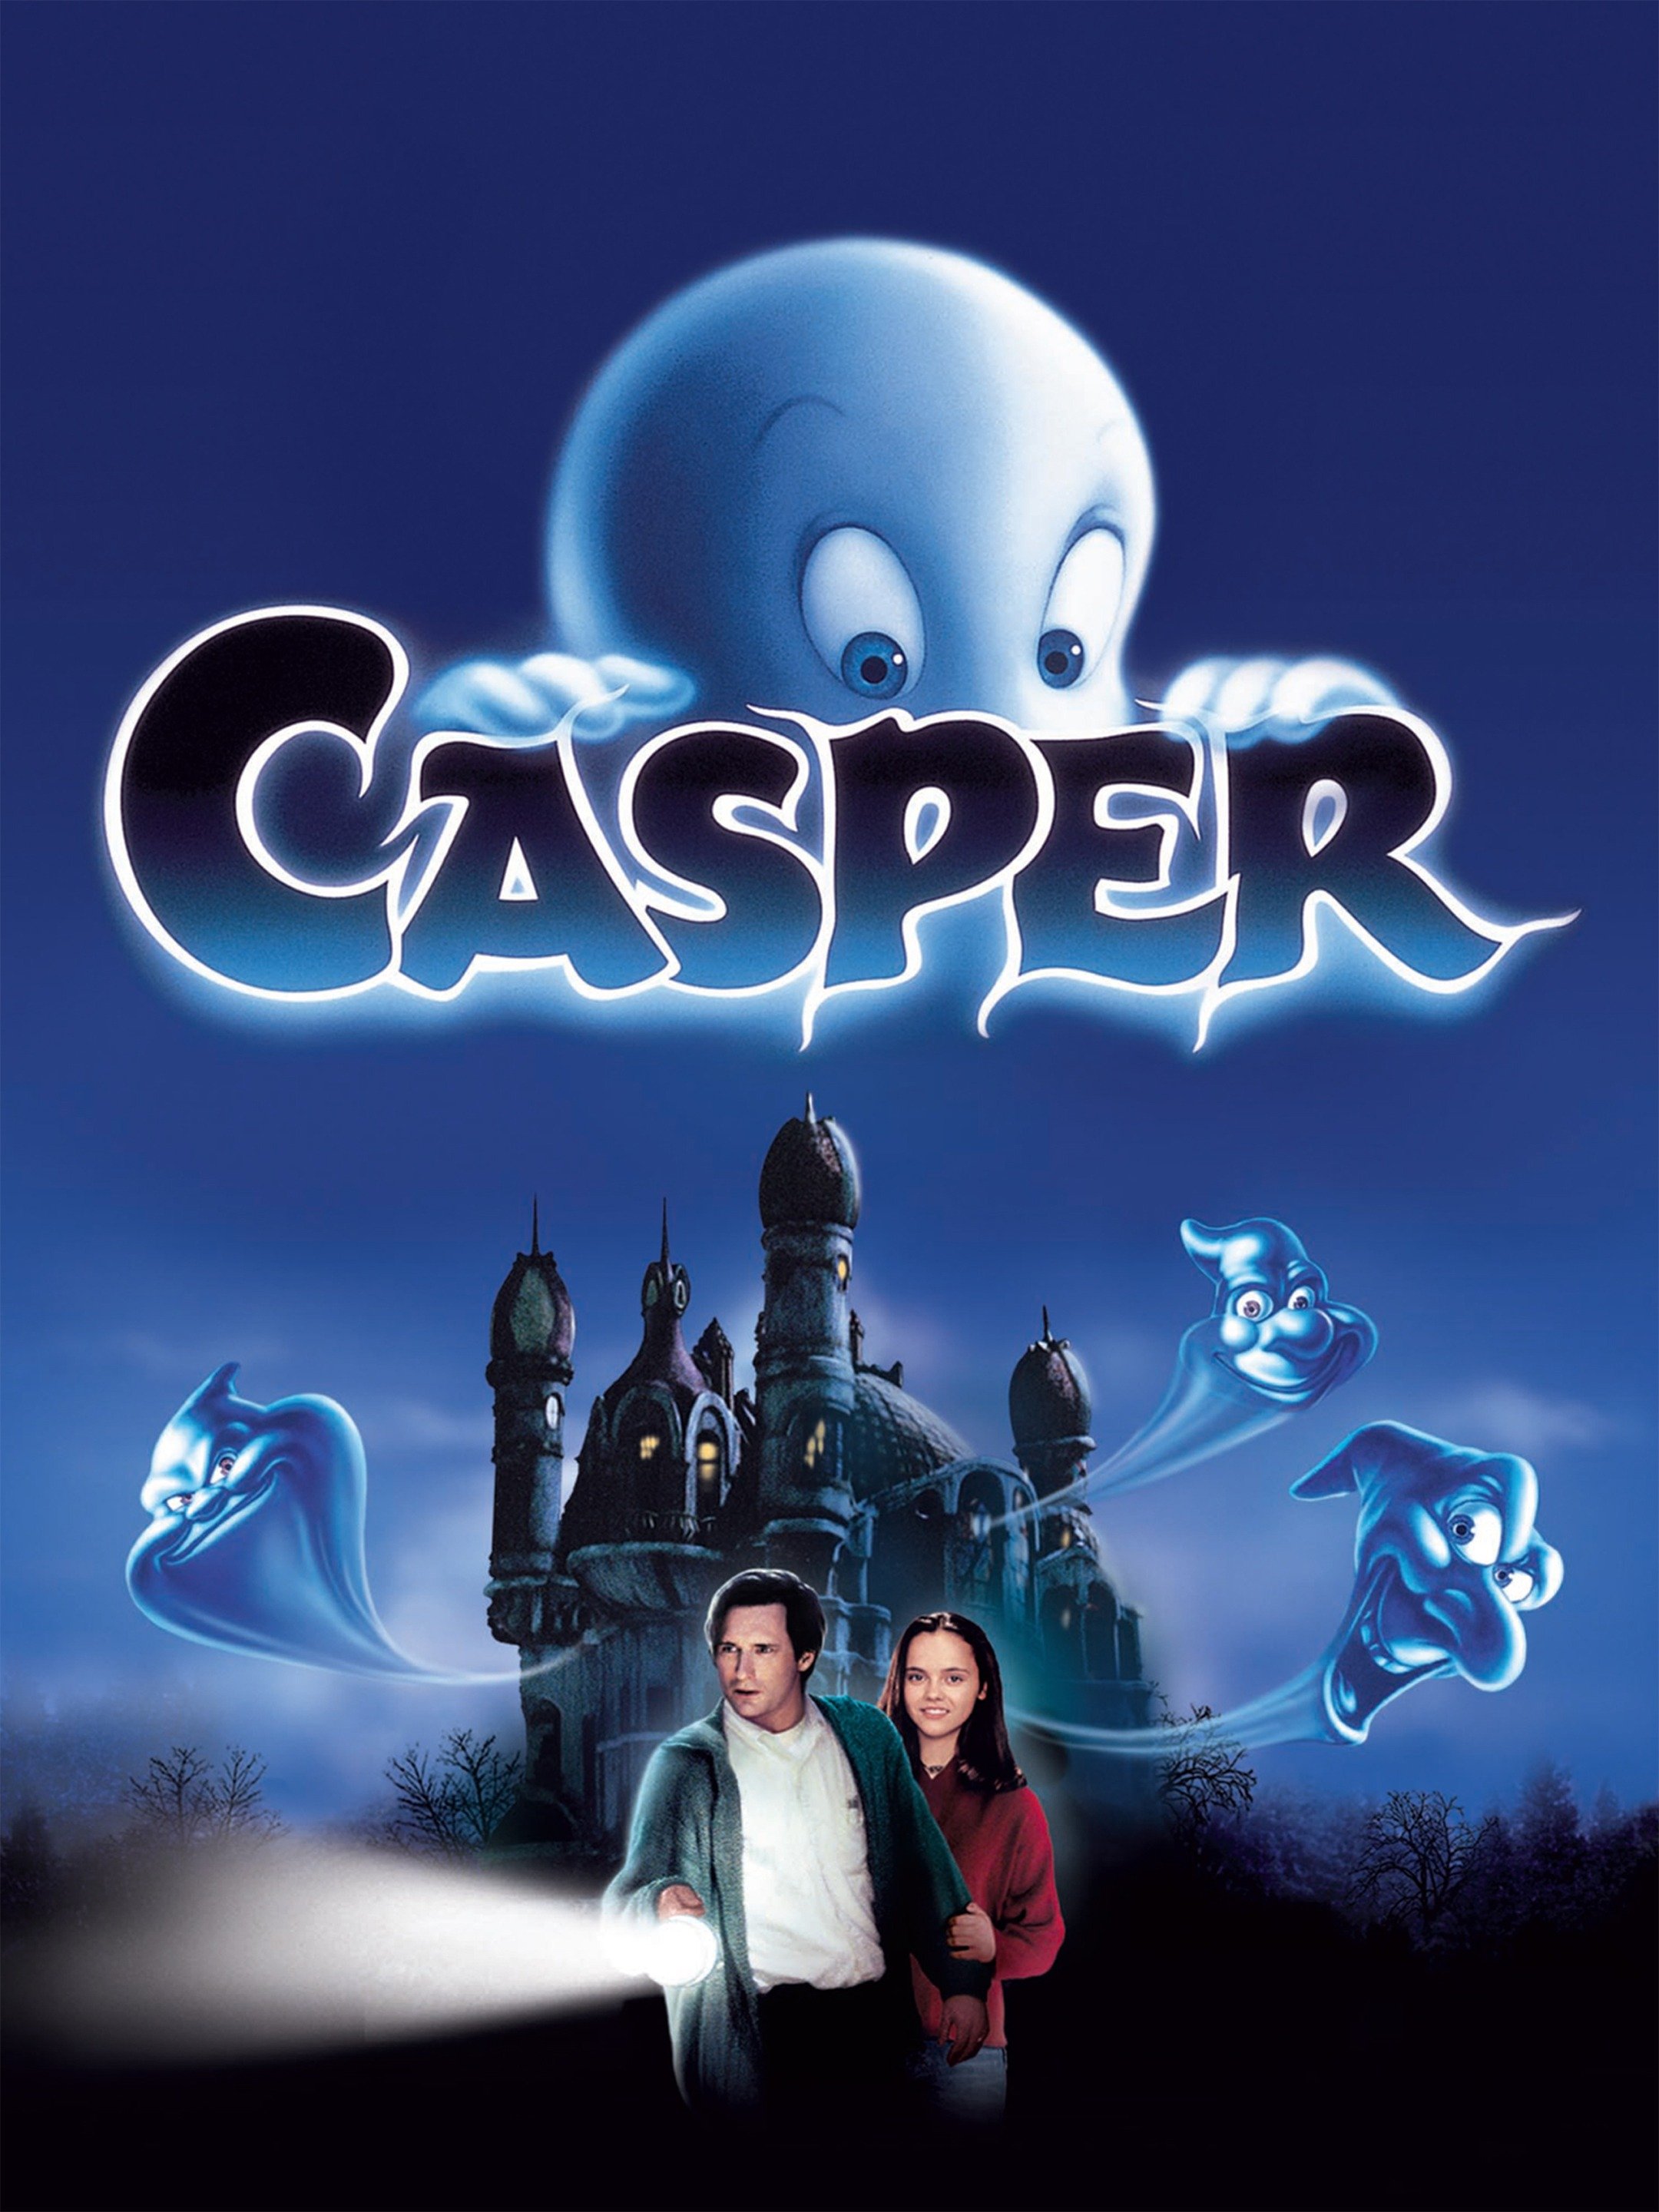 Casper- Halloween Movies For Family